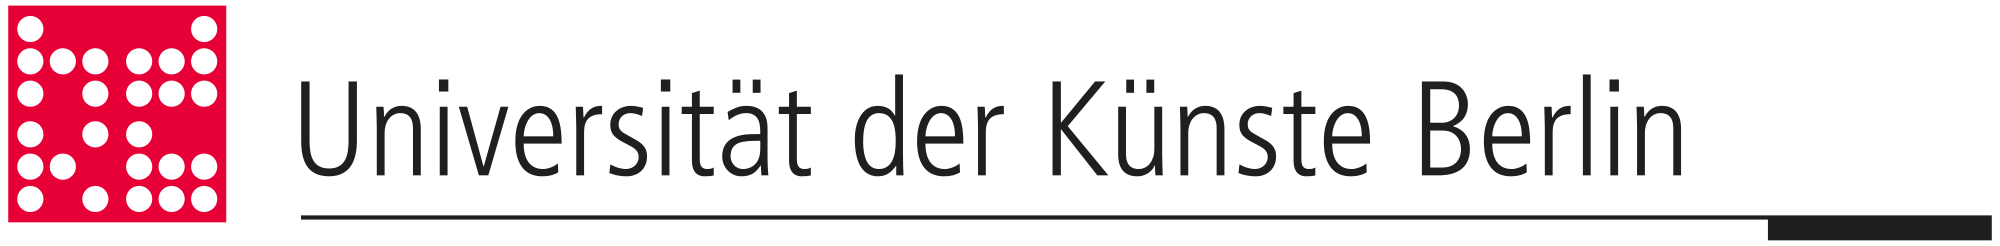 UDK Logo - UdK Berlin Logo Farbig.svg